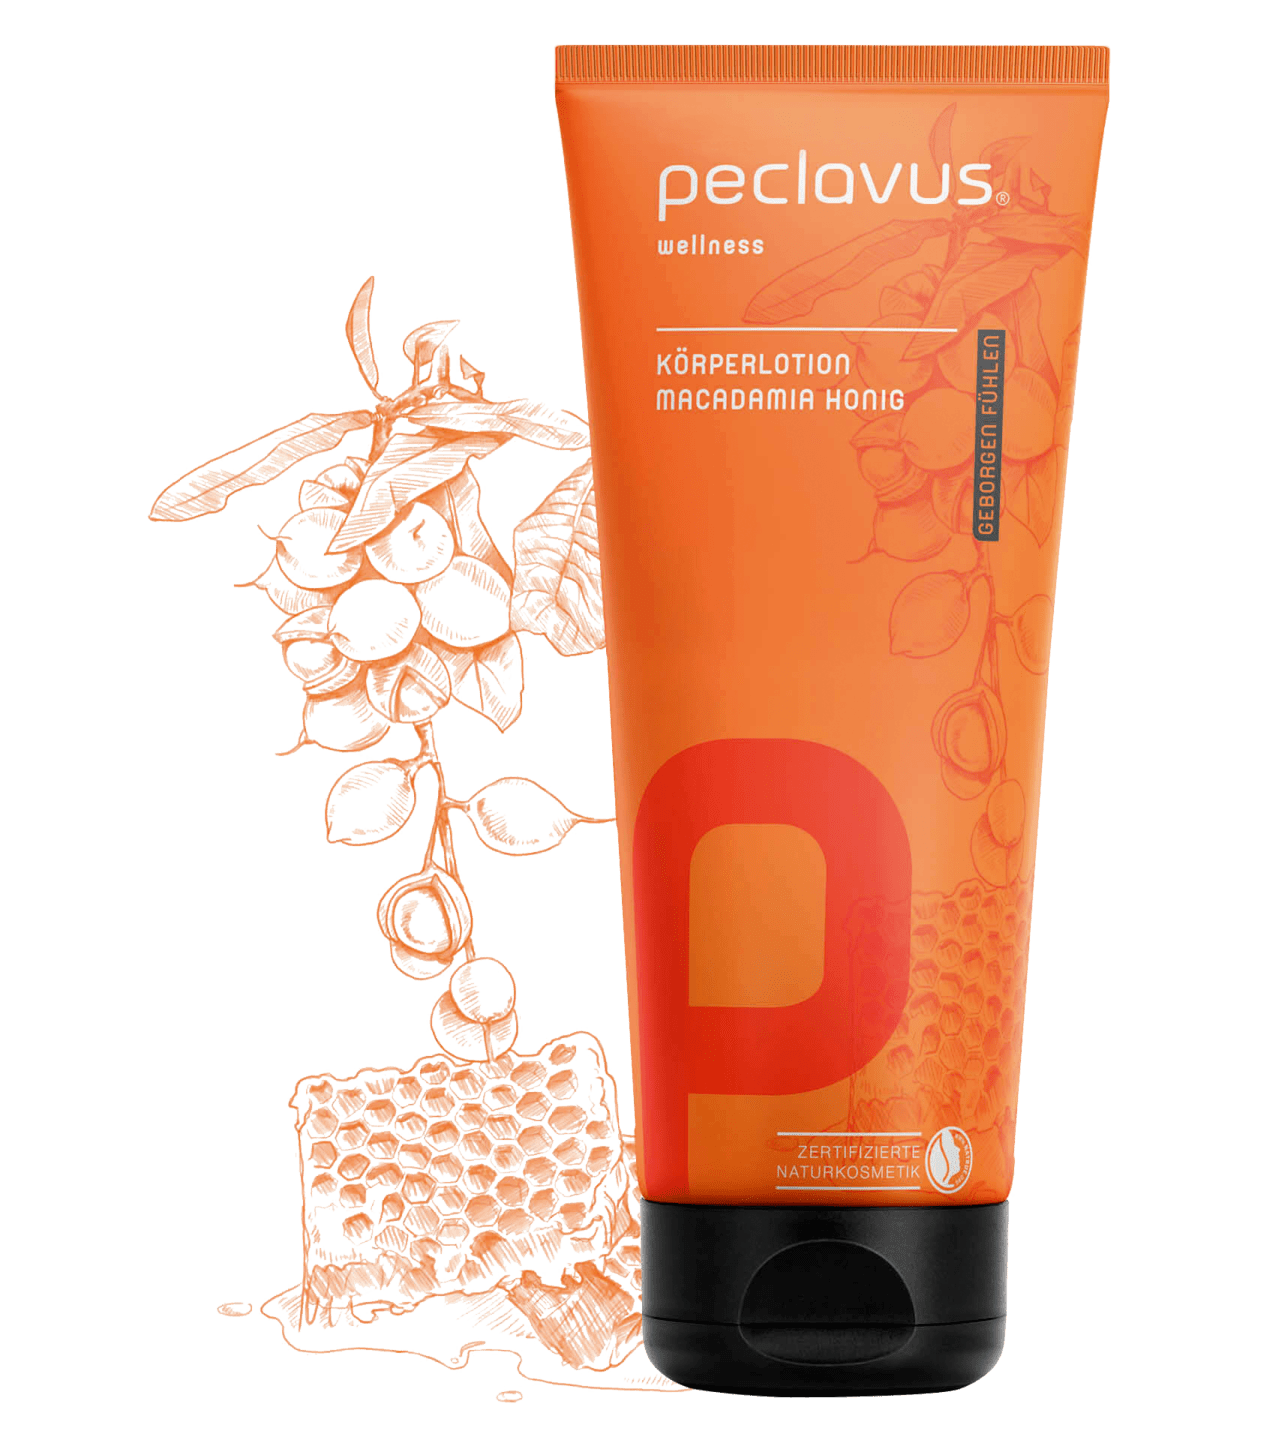 peclavus - Körperlotion Macadamia Honig, 200 ml